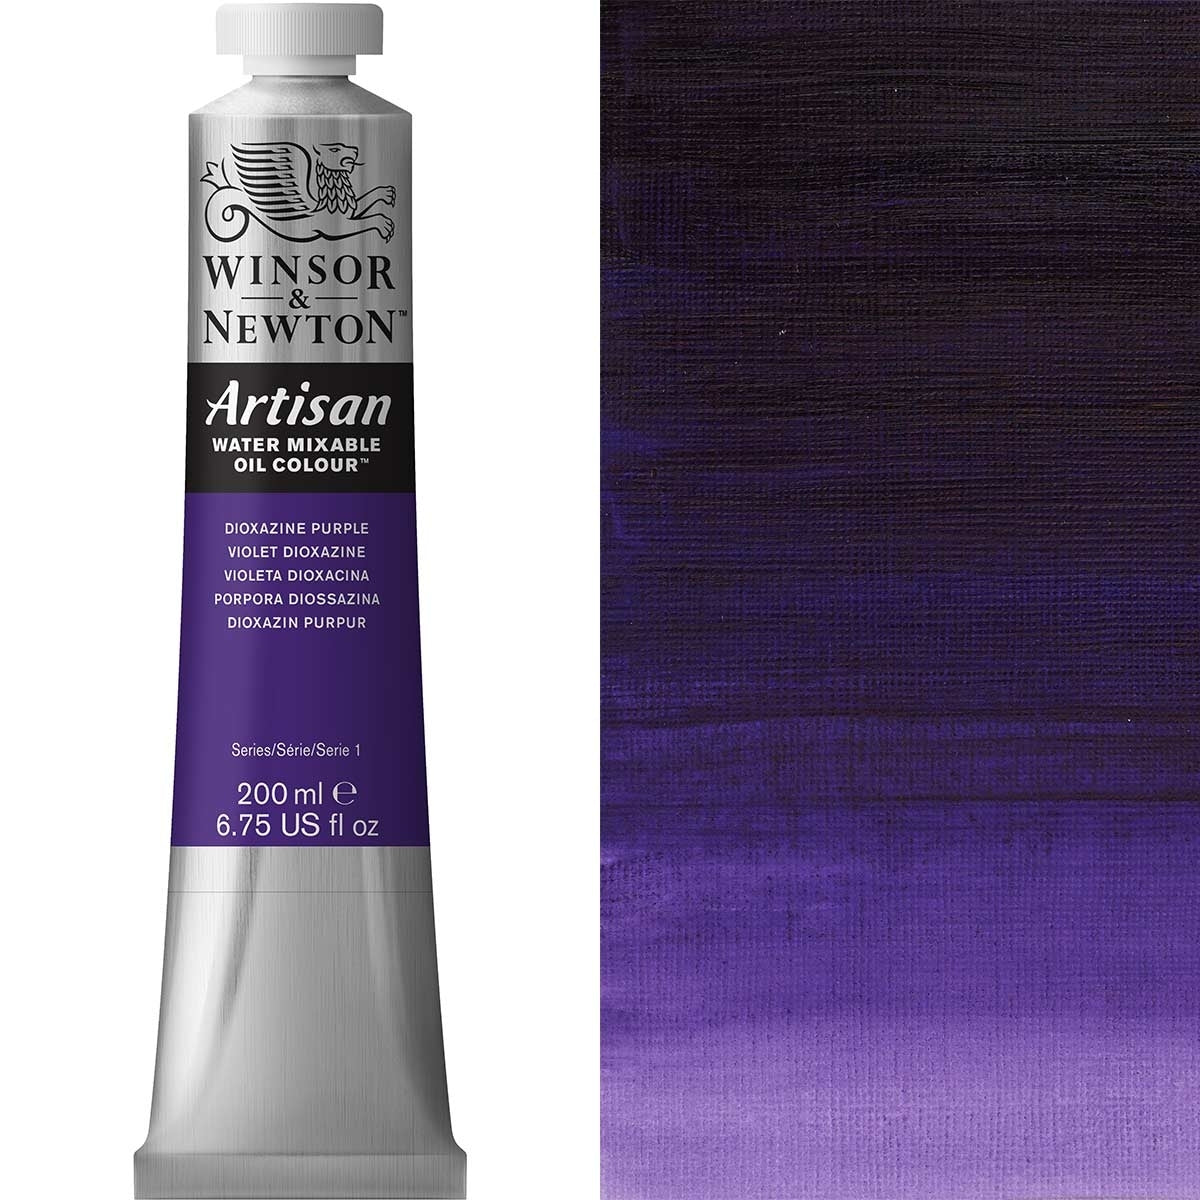 Winsor and Newton - Artisan Oil Colour Watermixable - 200ml - Dioxazine Purple